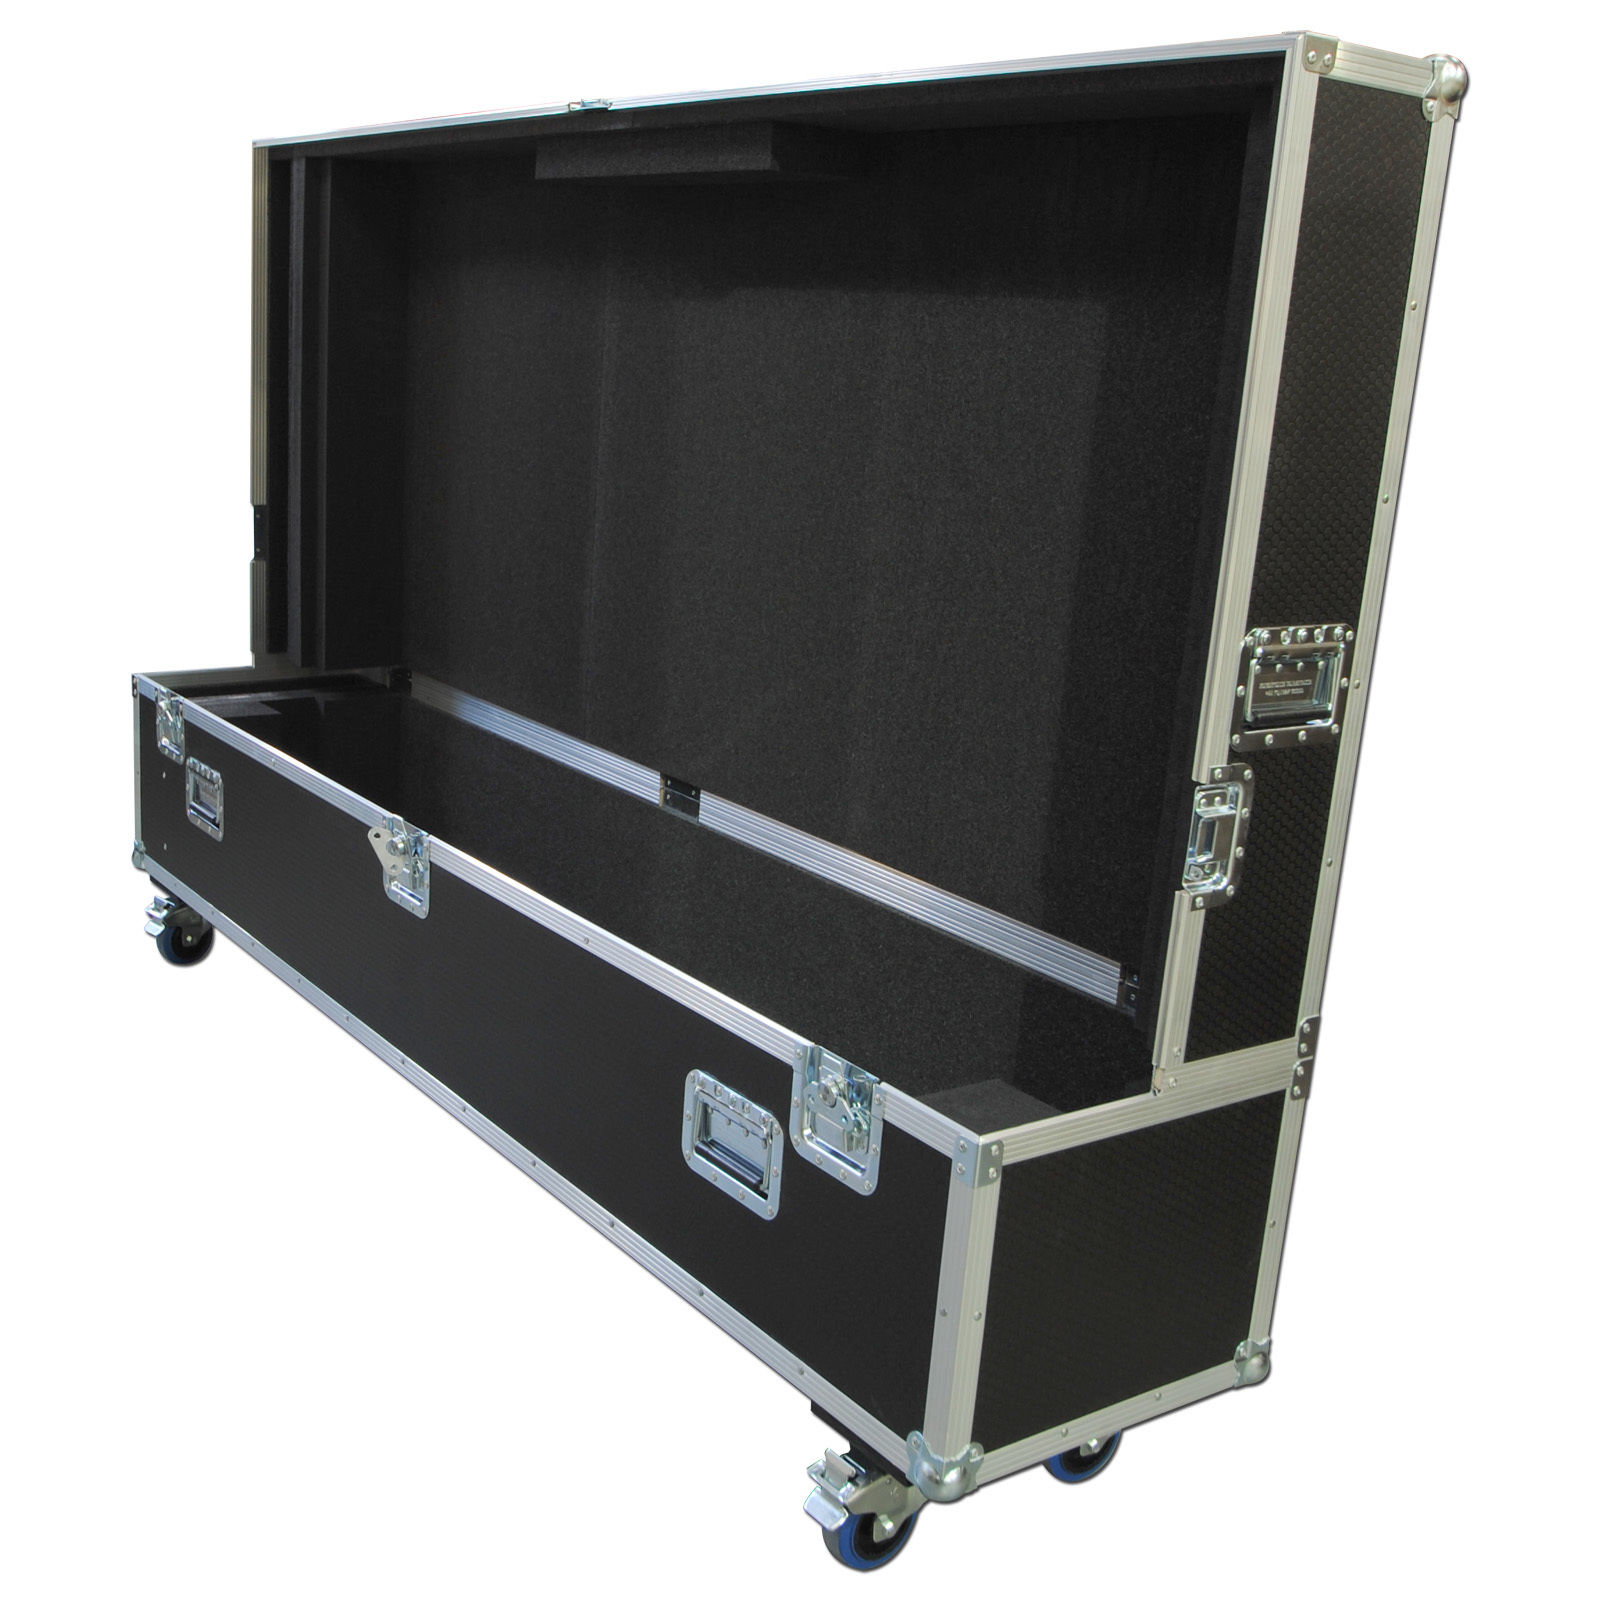 Viewsonic CDP9800 LCD TV Flight Case